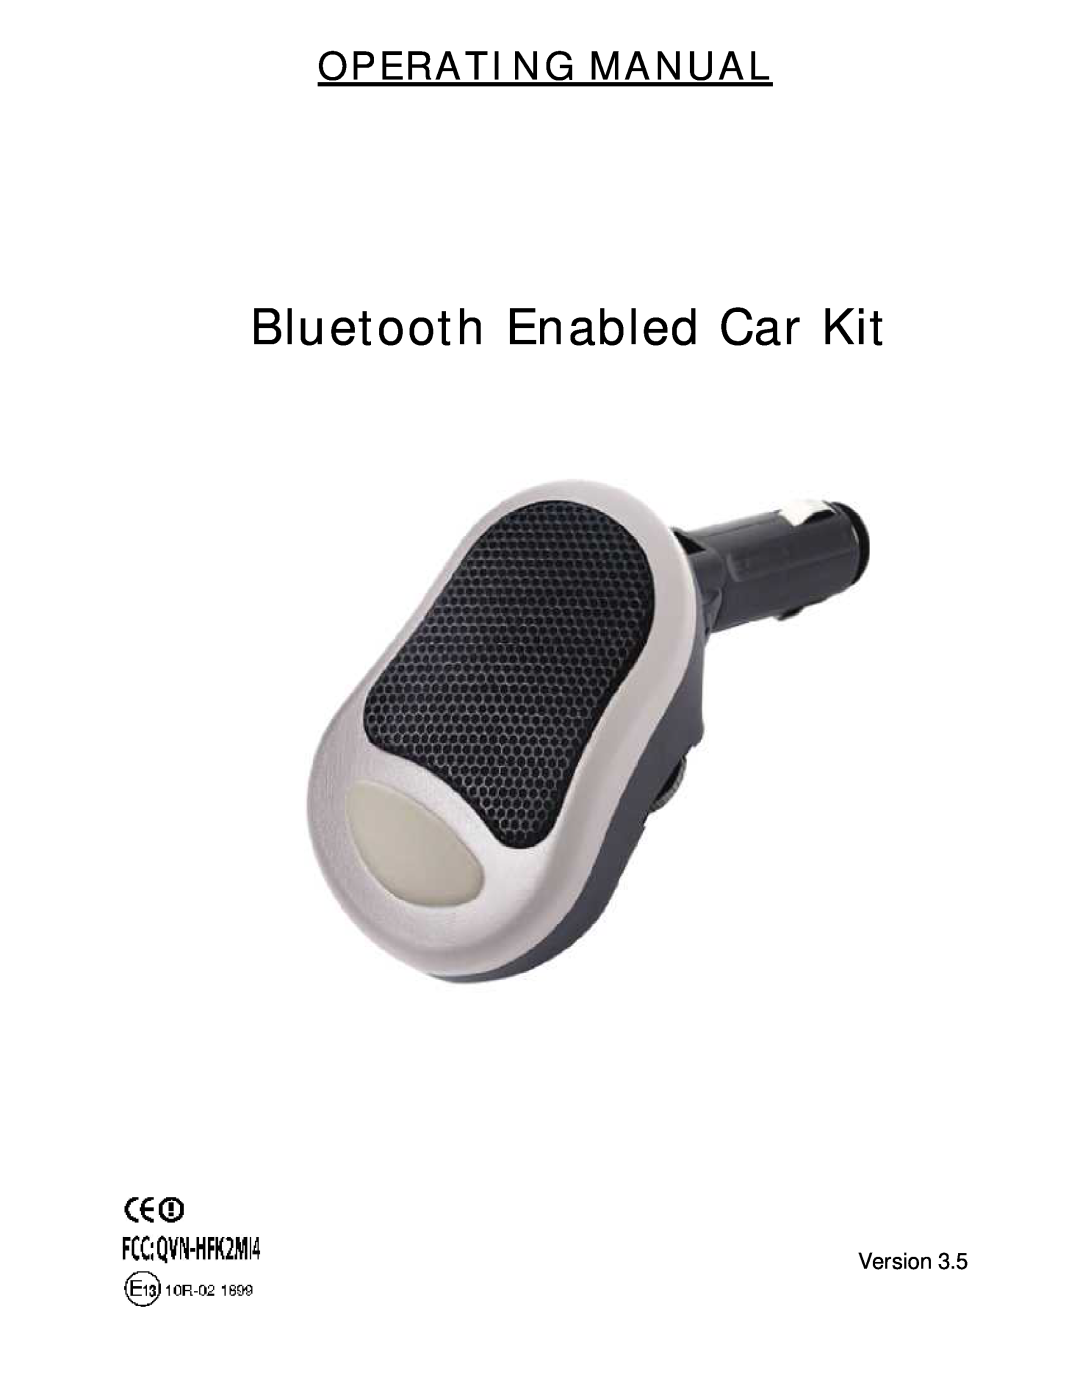 Sony headphone manual Bluetooth Enabled Car Kit, Operating Manual 